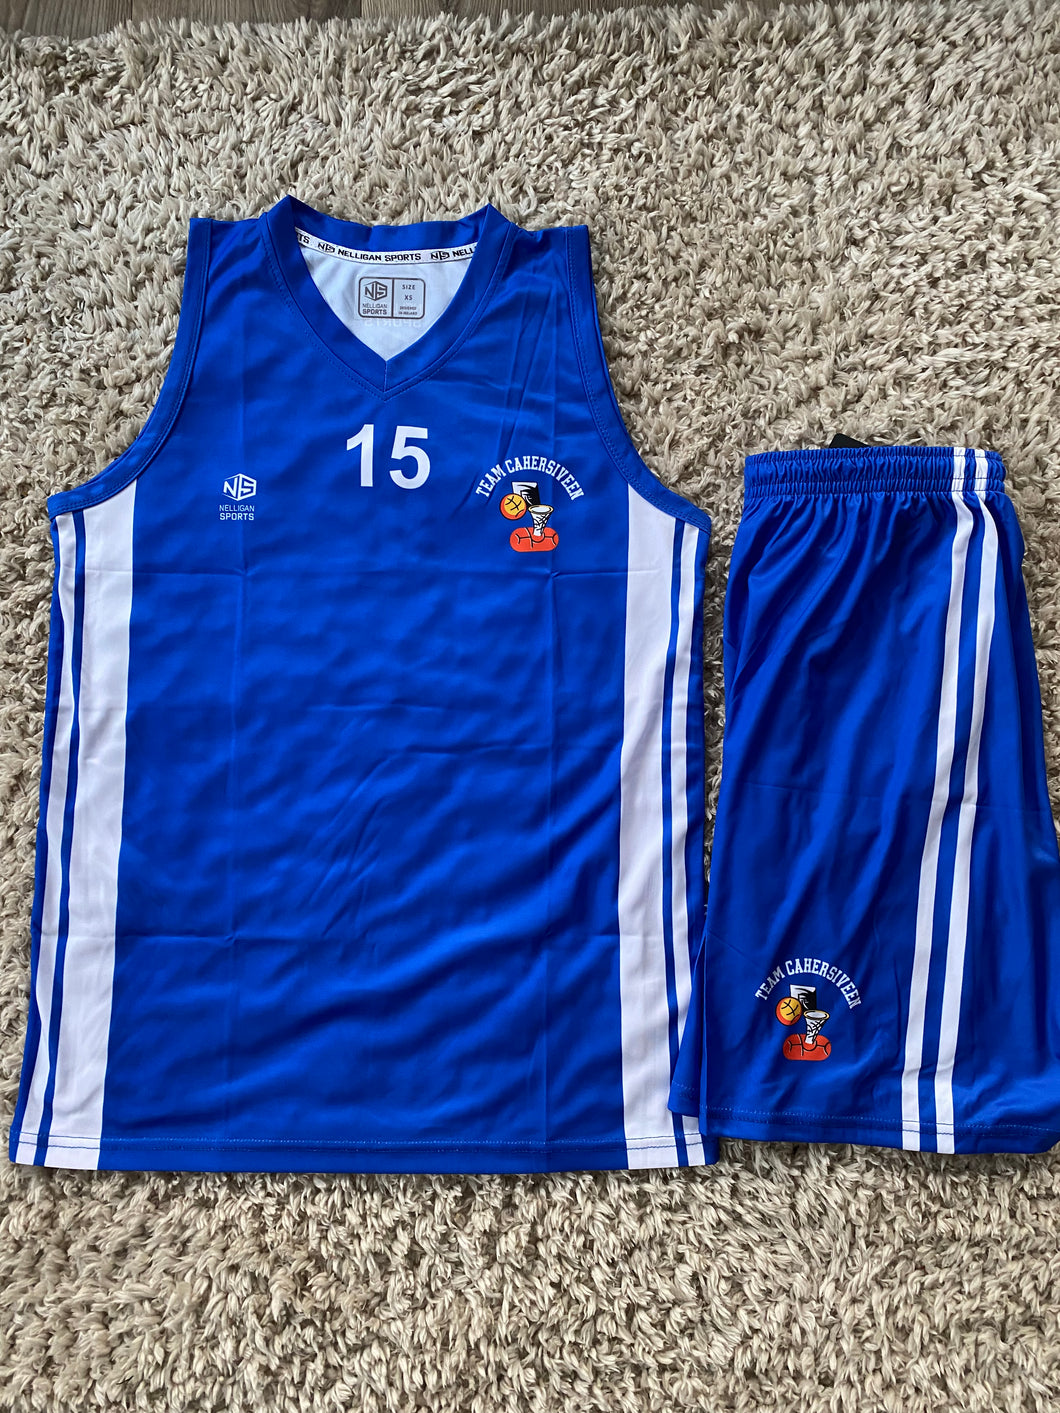 Basketball Match Shorts - Cahersiveen Basketball Club